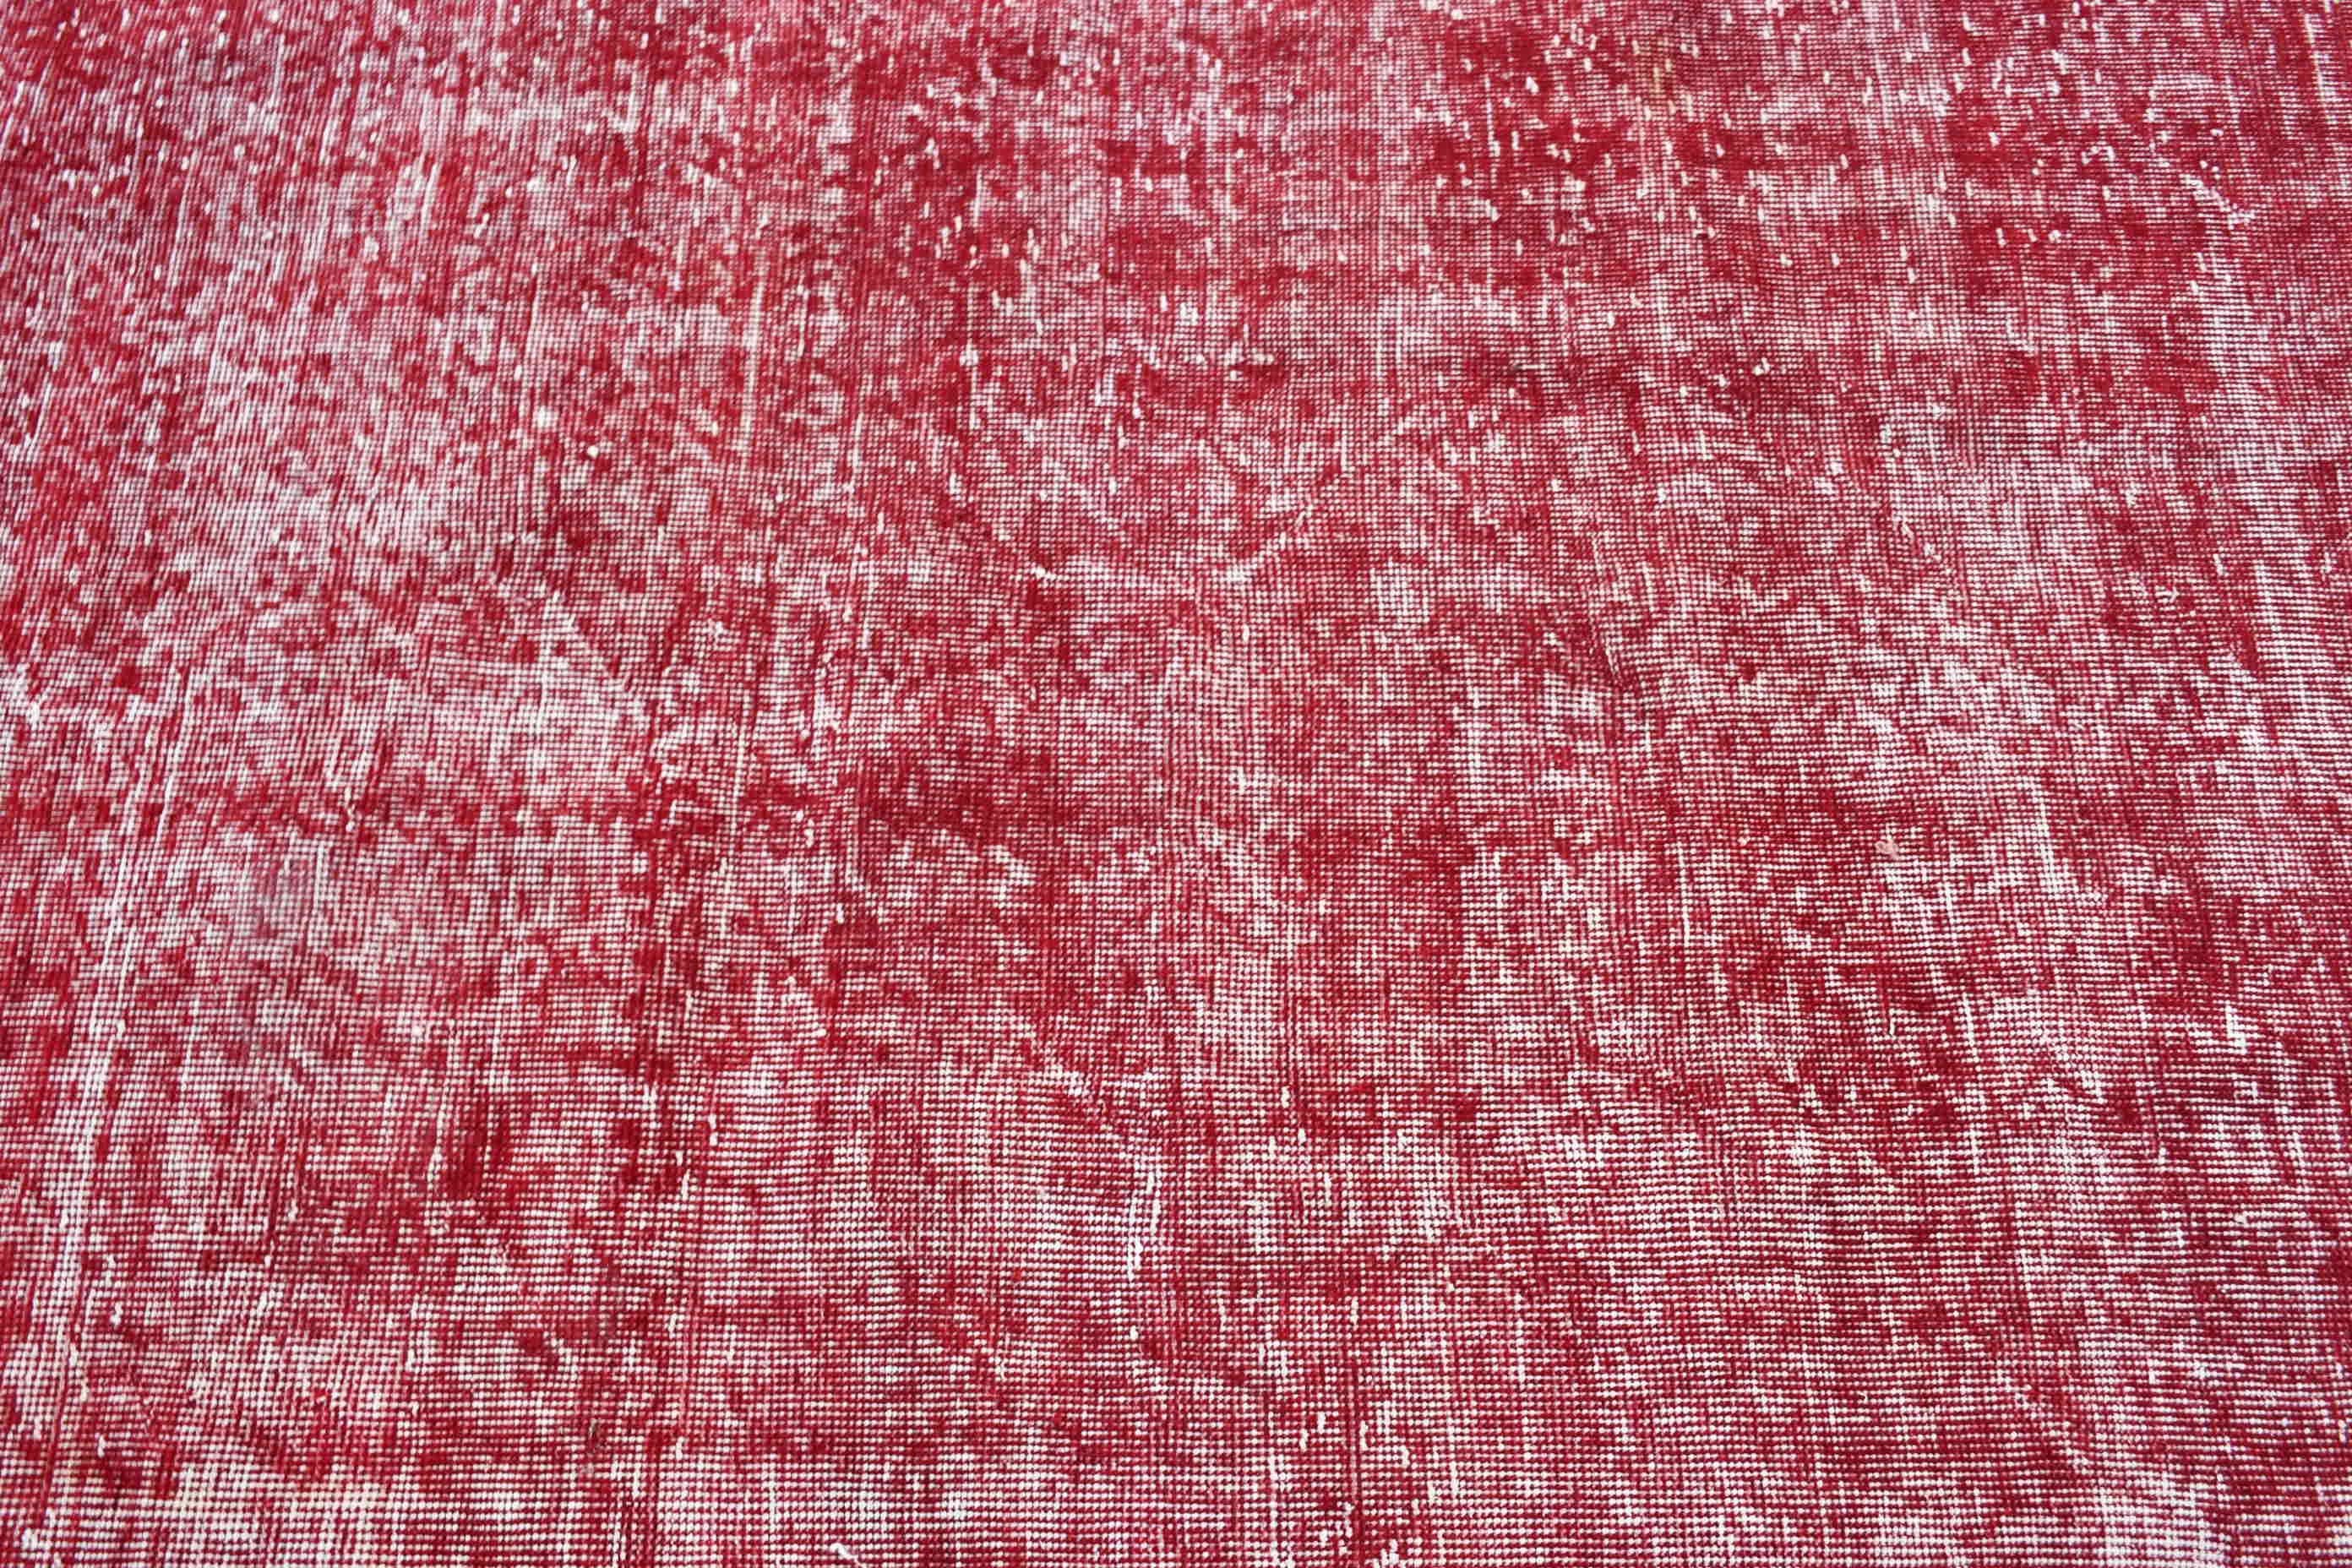 Moroccan Rugs, Wool Rug, Floor Rug, Rugs for Area, Indoor Rugs, Vintage Rug, Turkish Rugs, 3.7x6.8 ft Area Rugs, Red Home Decor Rug